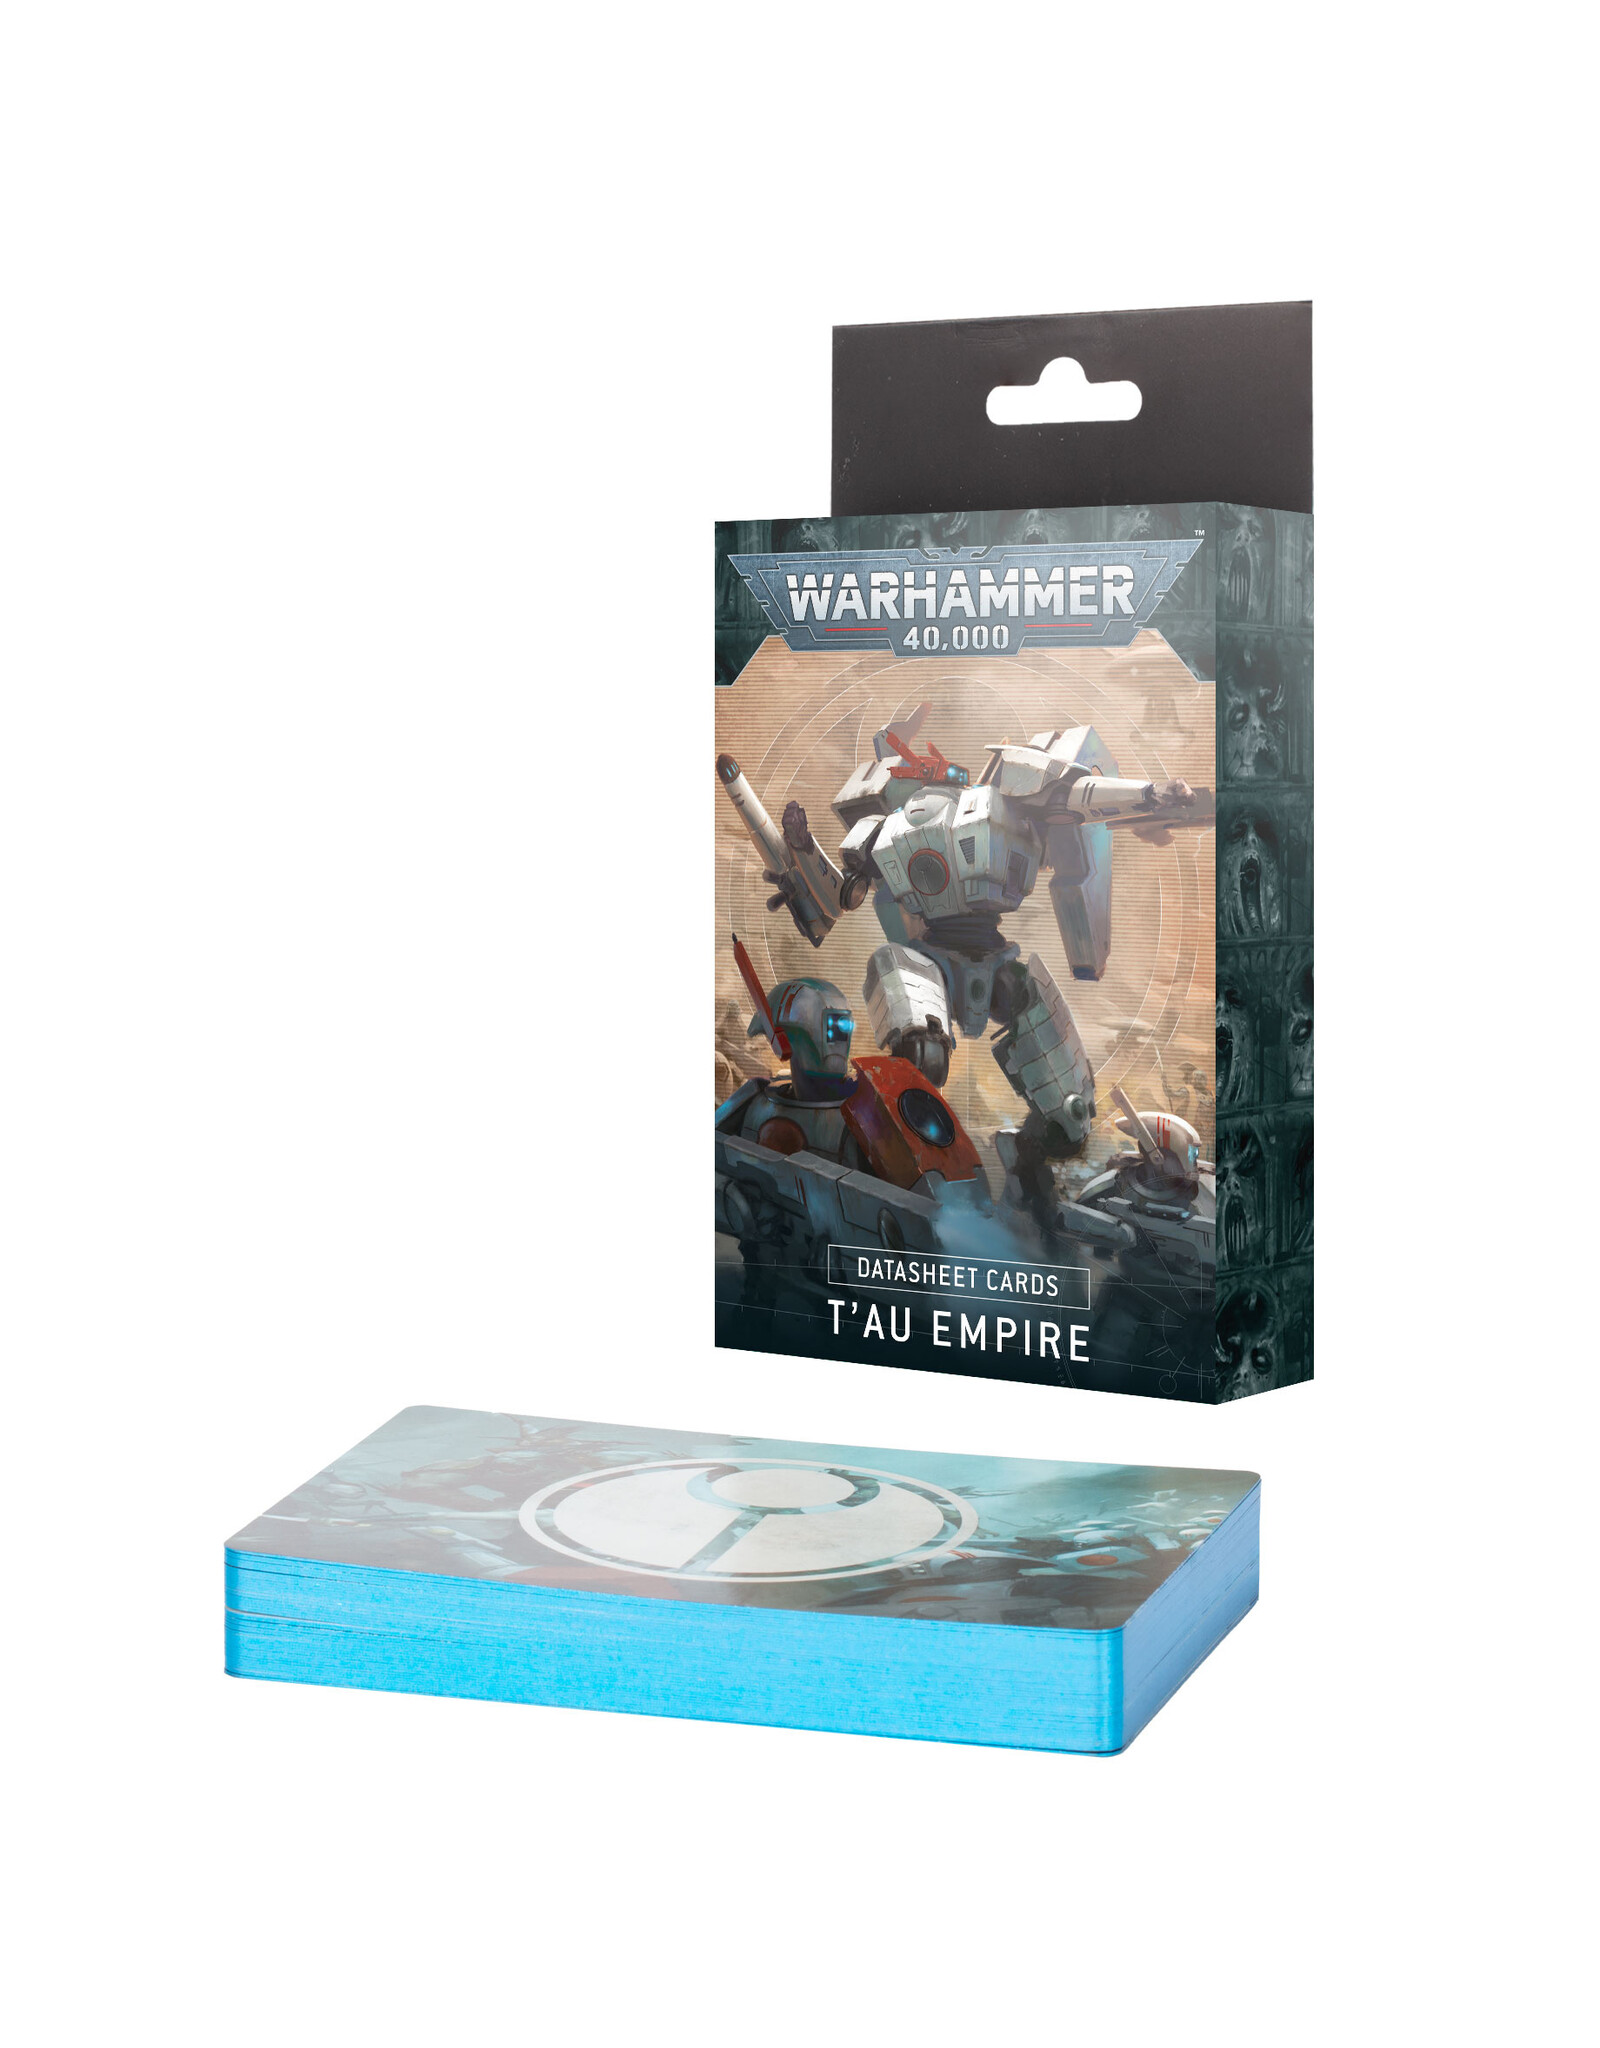 Warhammer 40K Datasheet Cards: Tau Empire